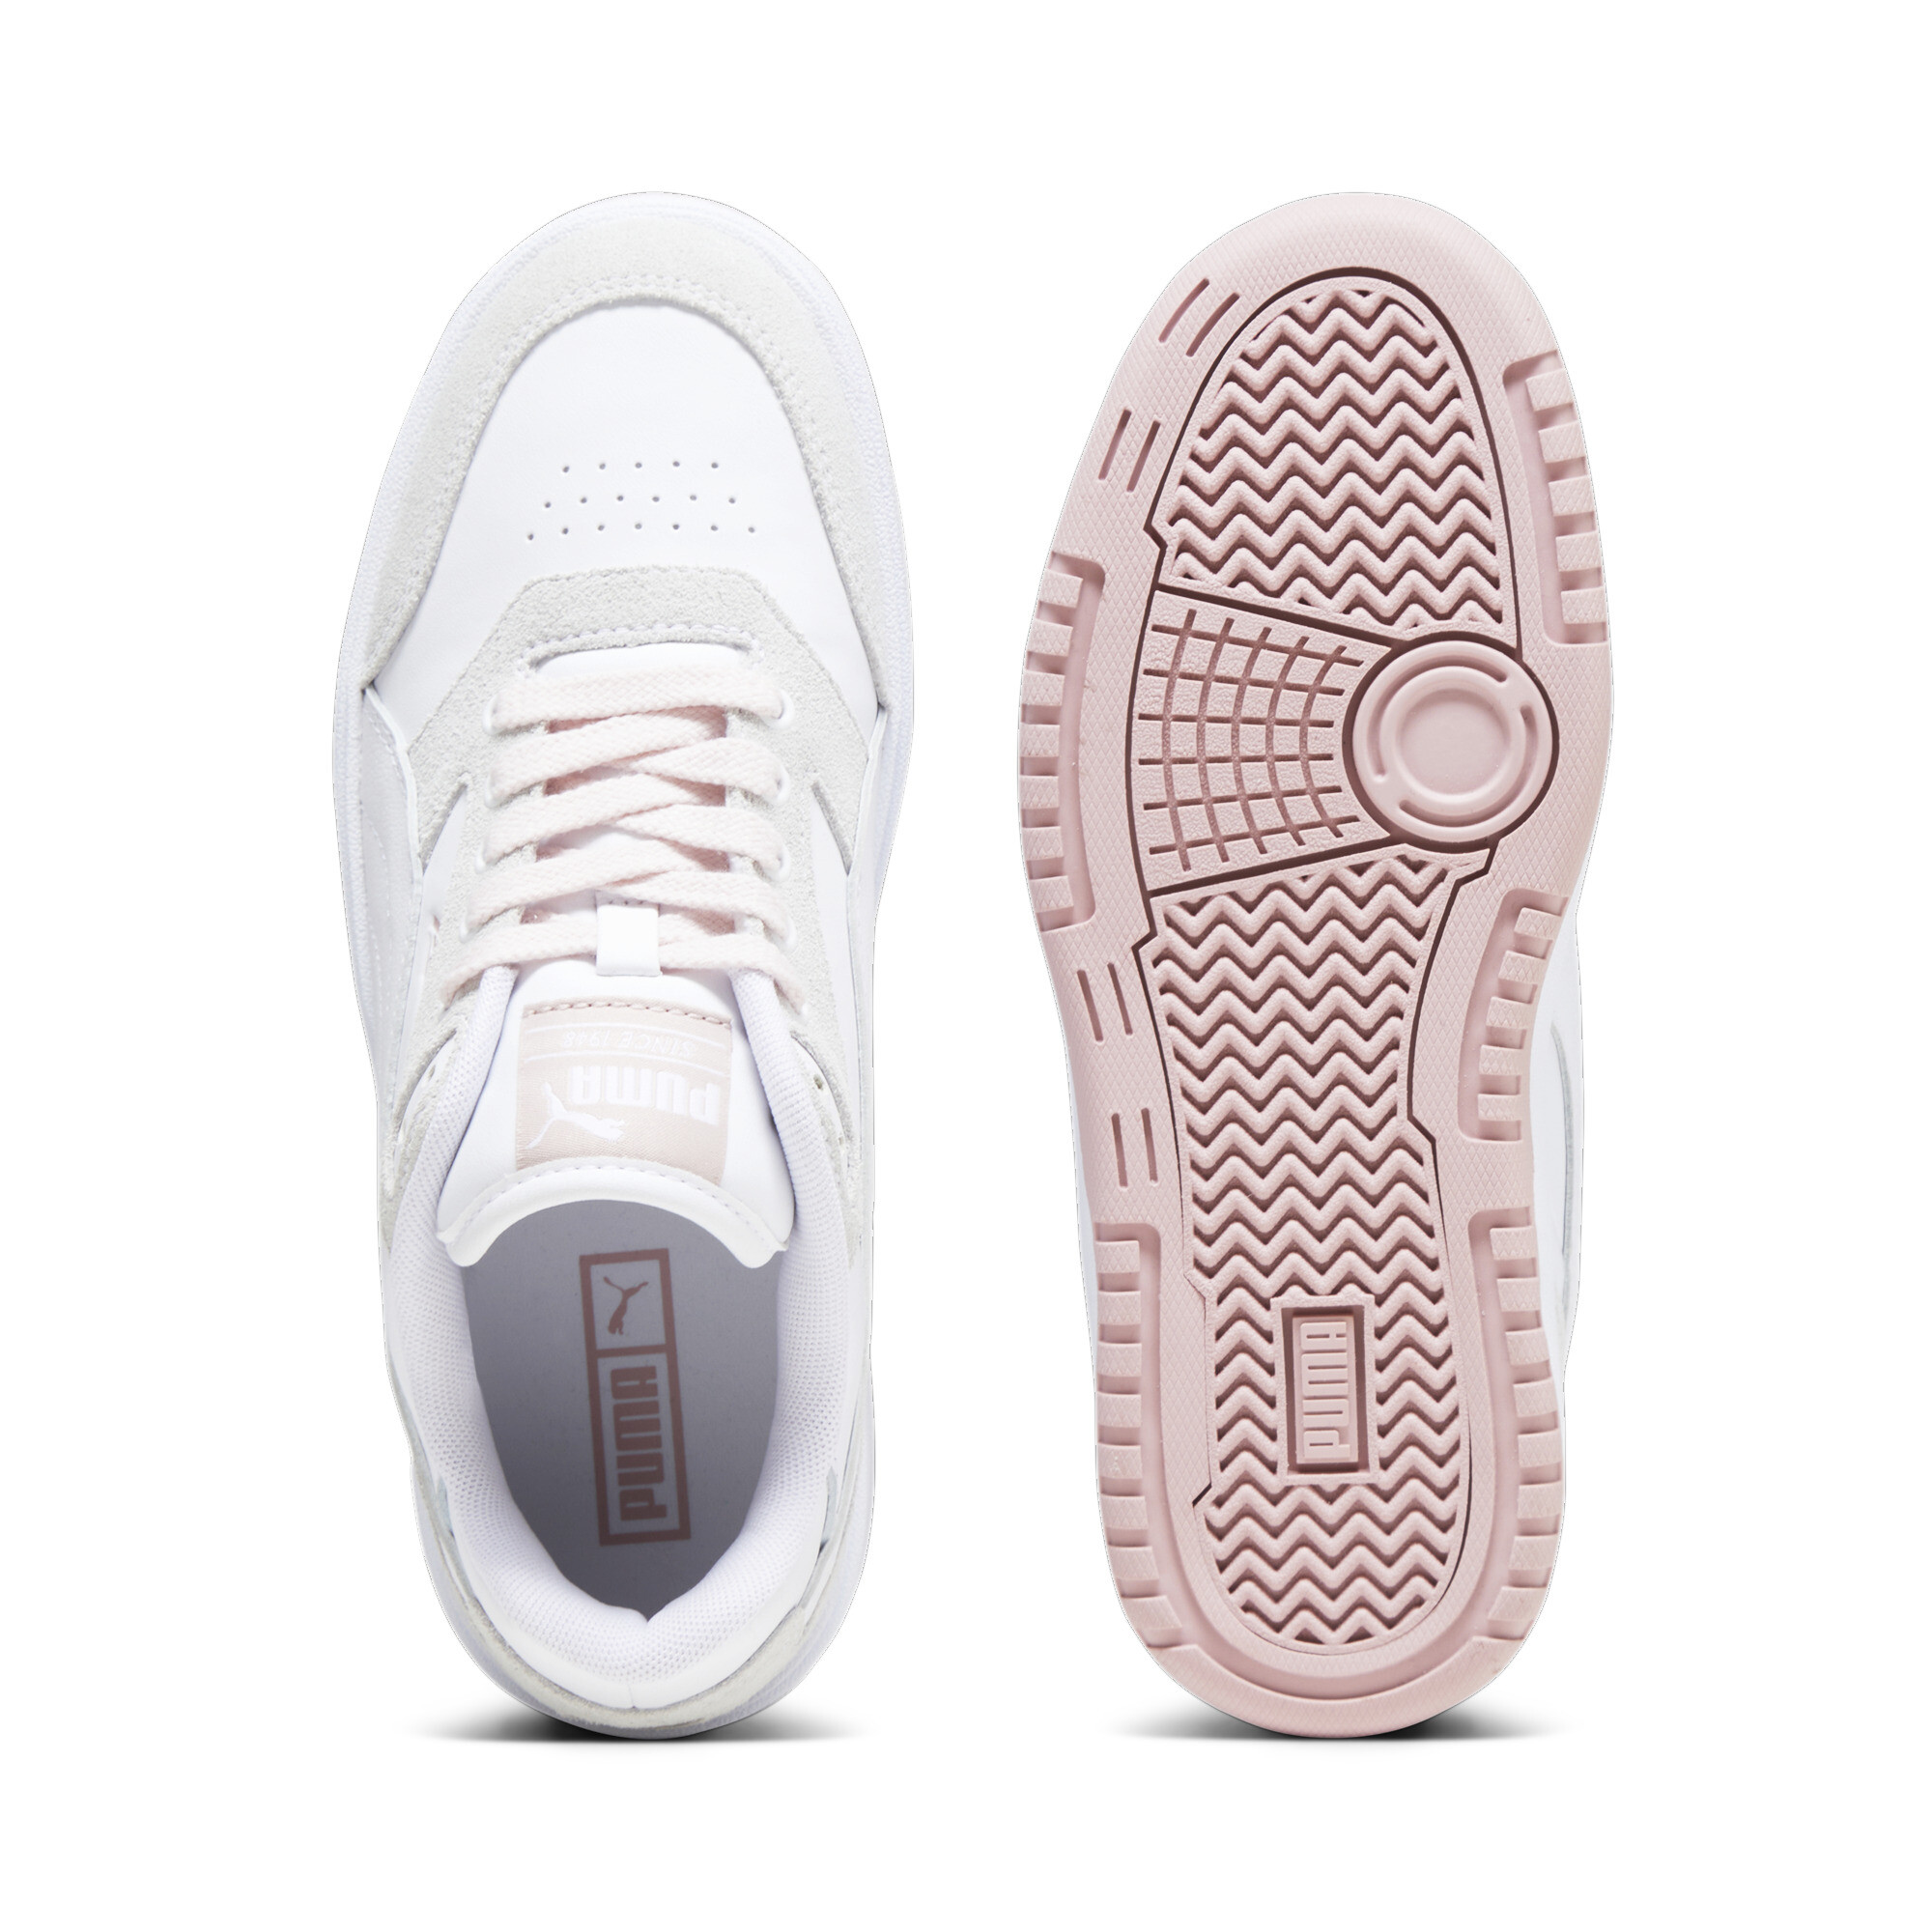 Women's Puma Doublecourt's Sneakers, White, Size 37, Shoes